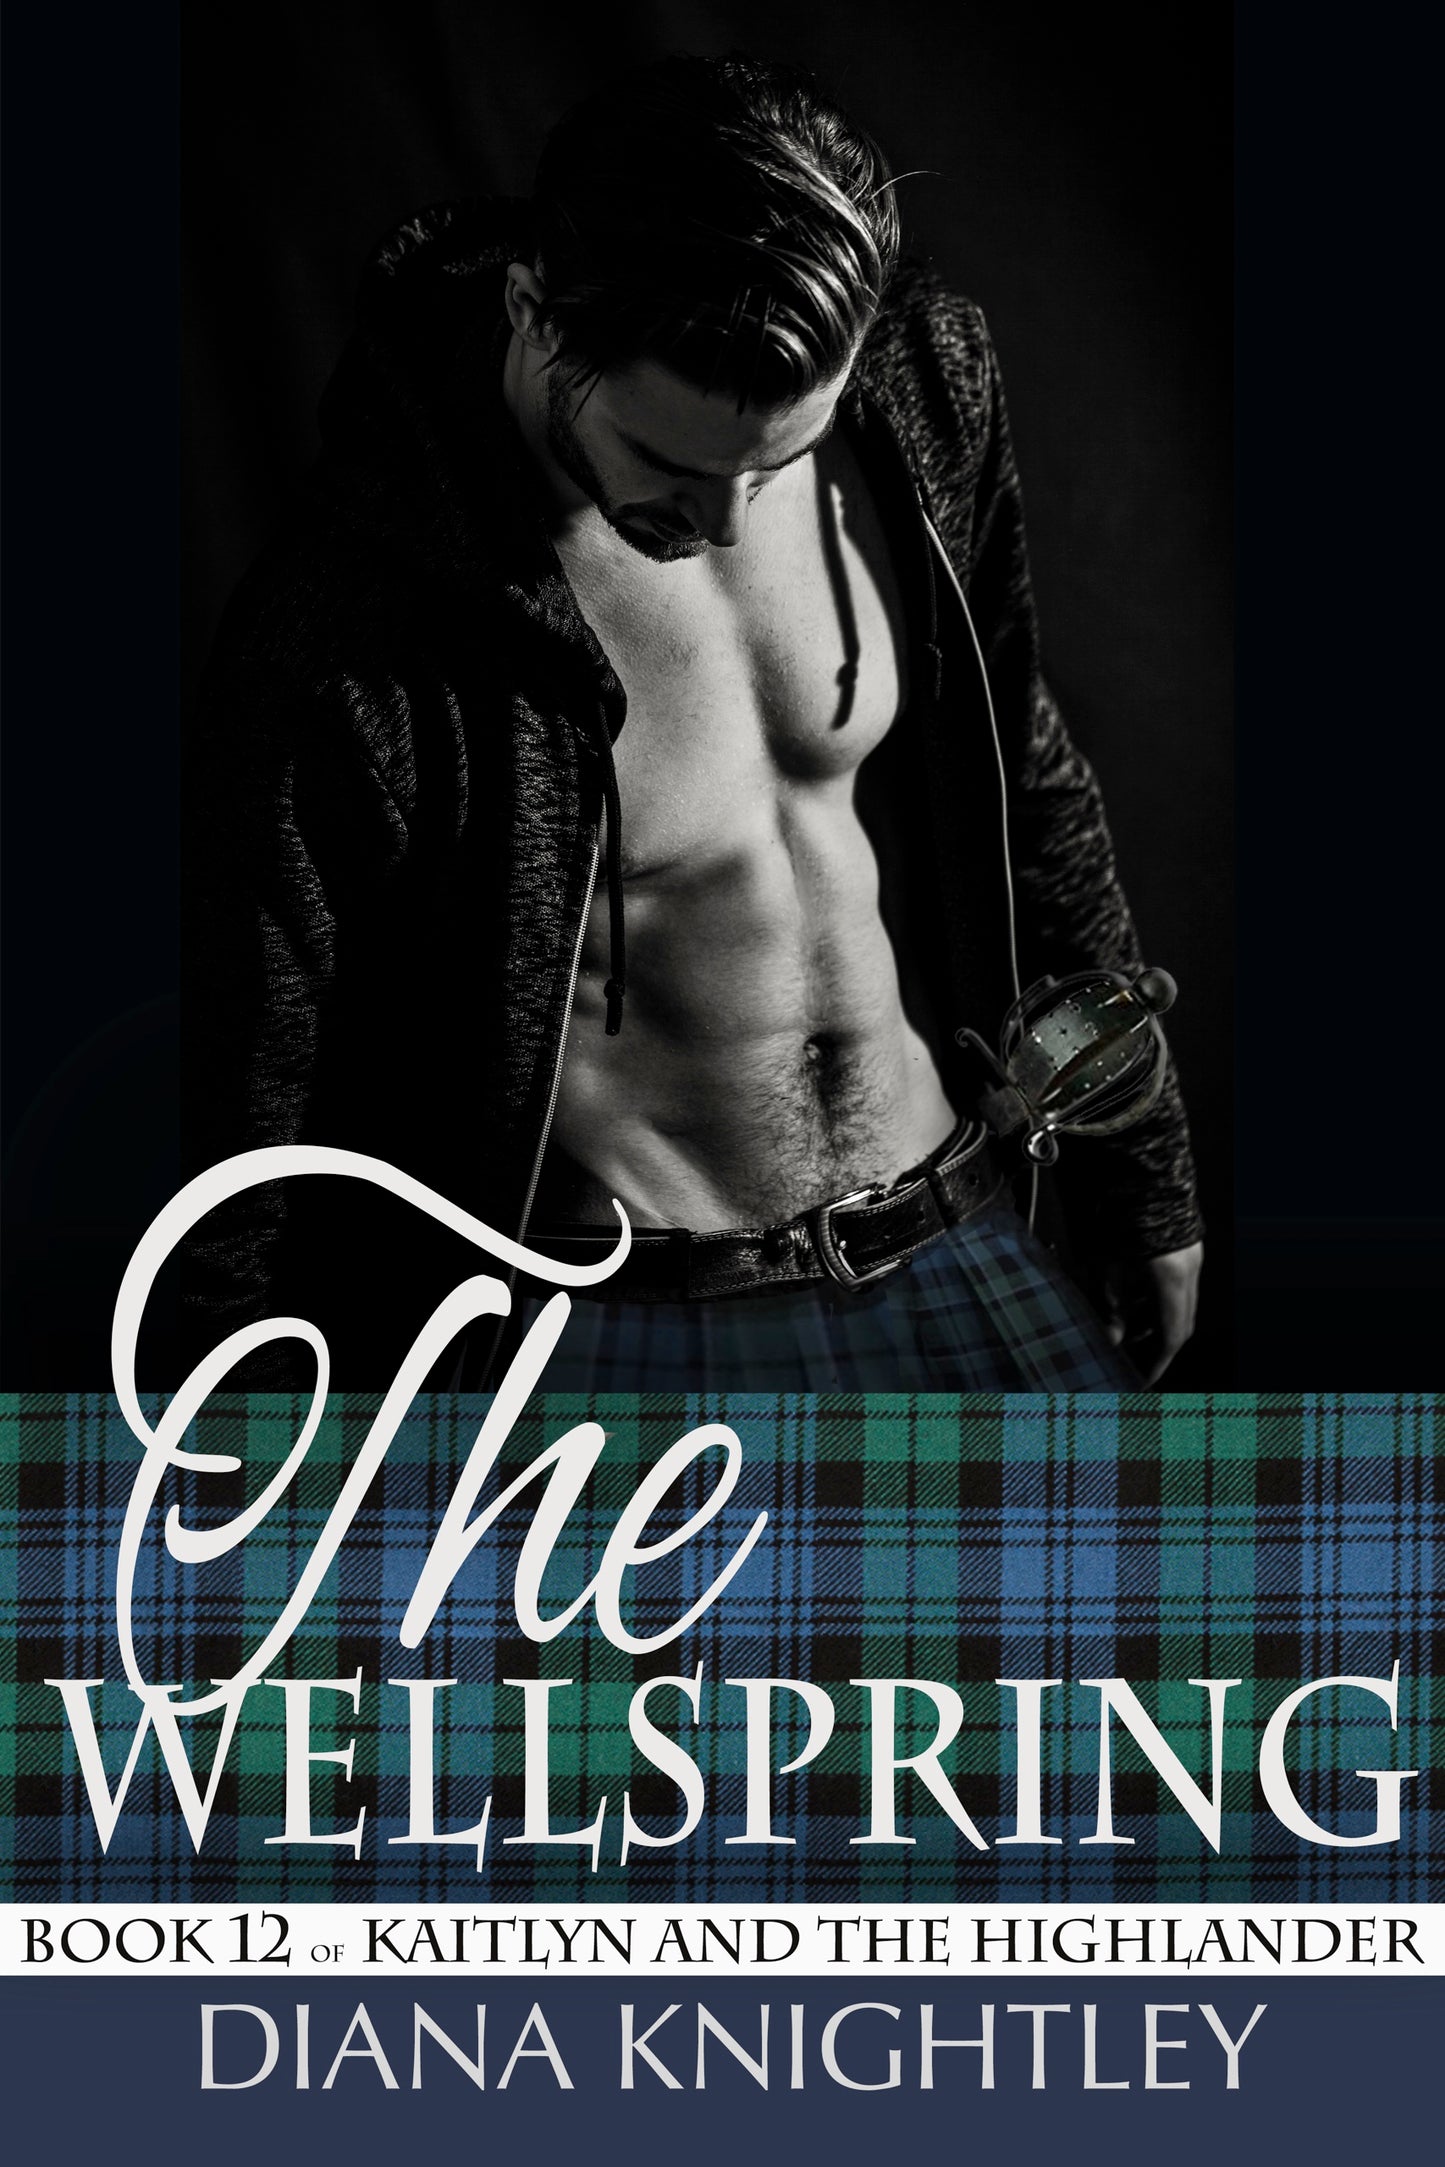 Book 12: The Wellspring (KATH)